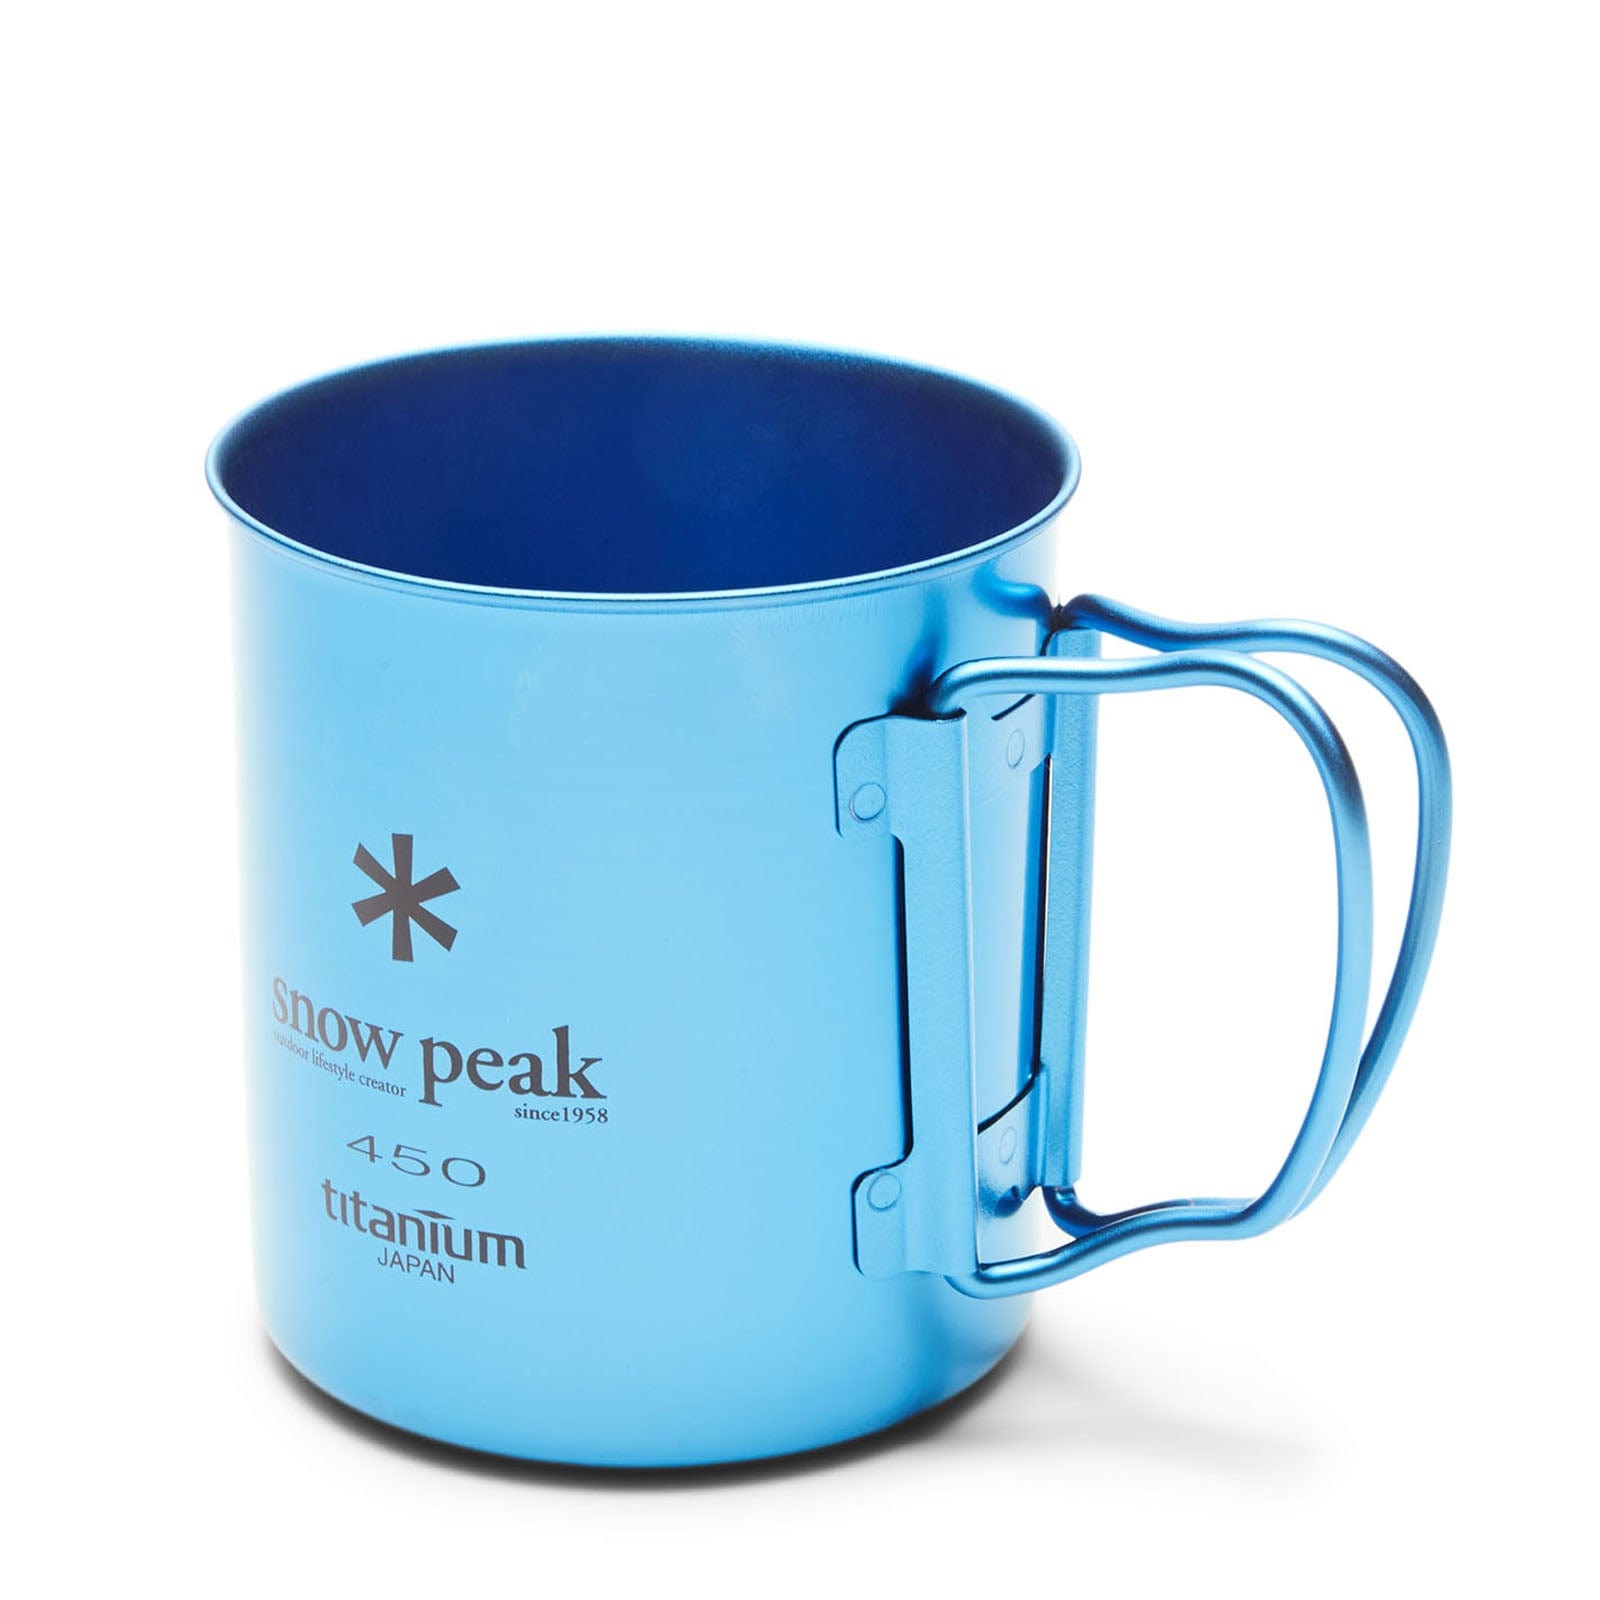 Snow Peak Home BLUE / O/S TITANIUM SINGLE CUP 450